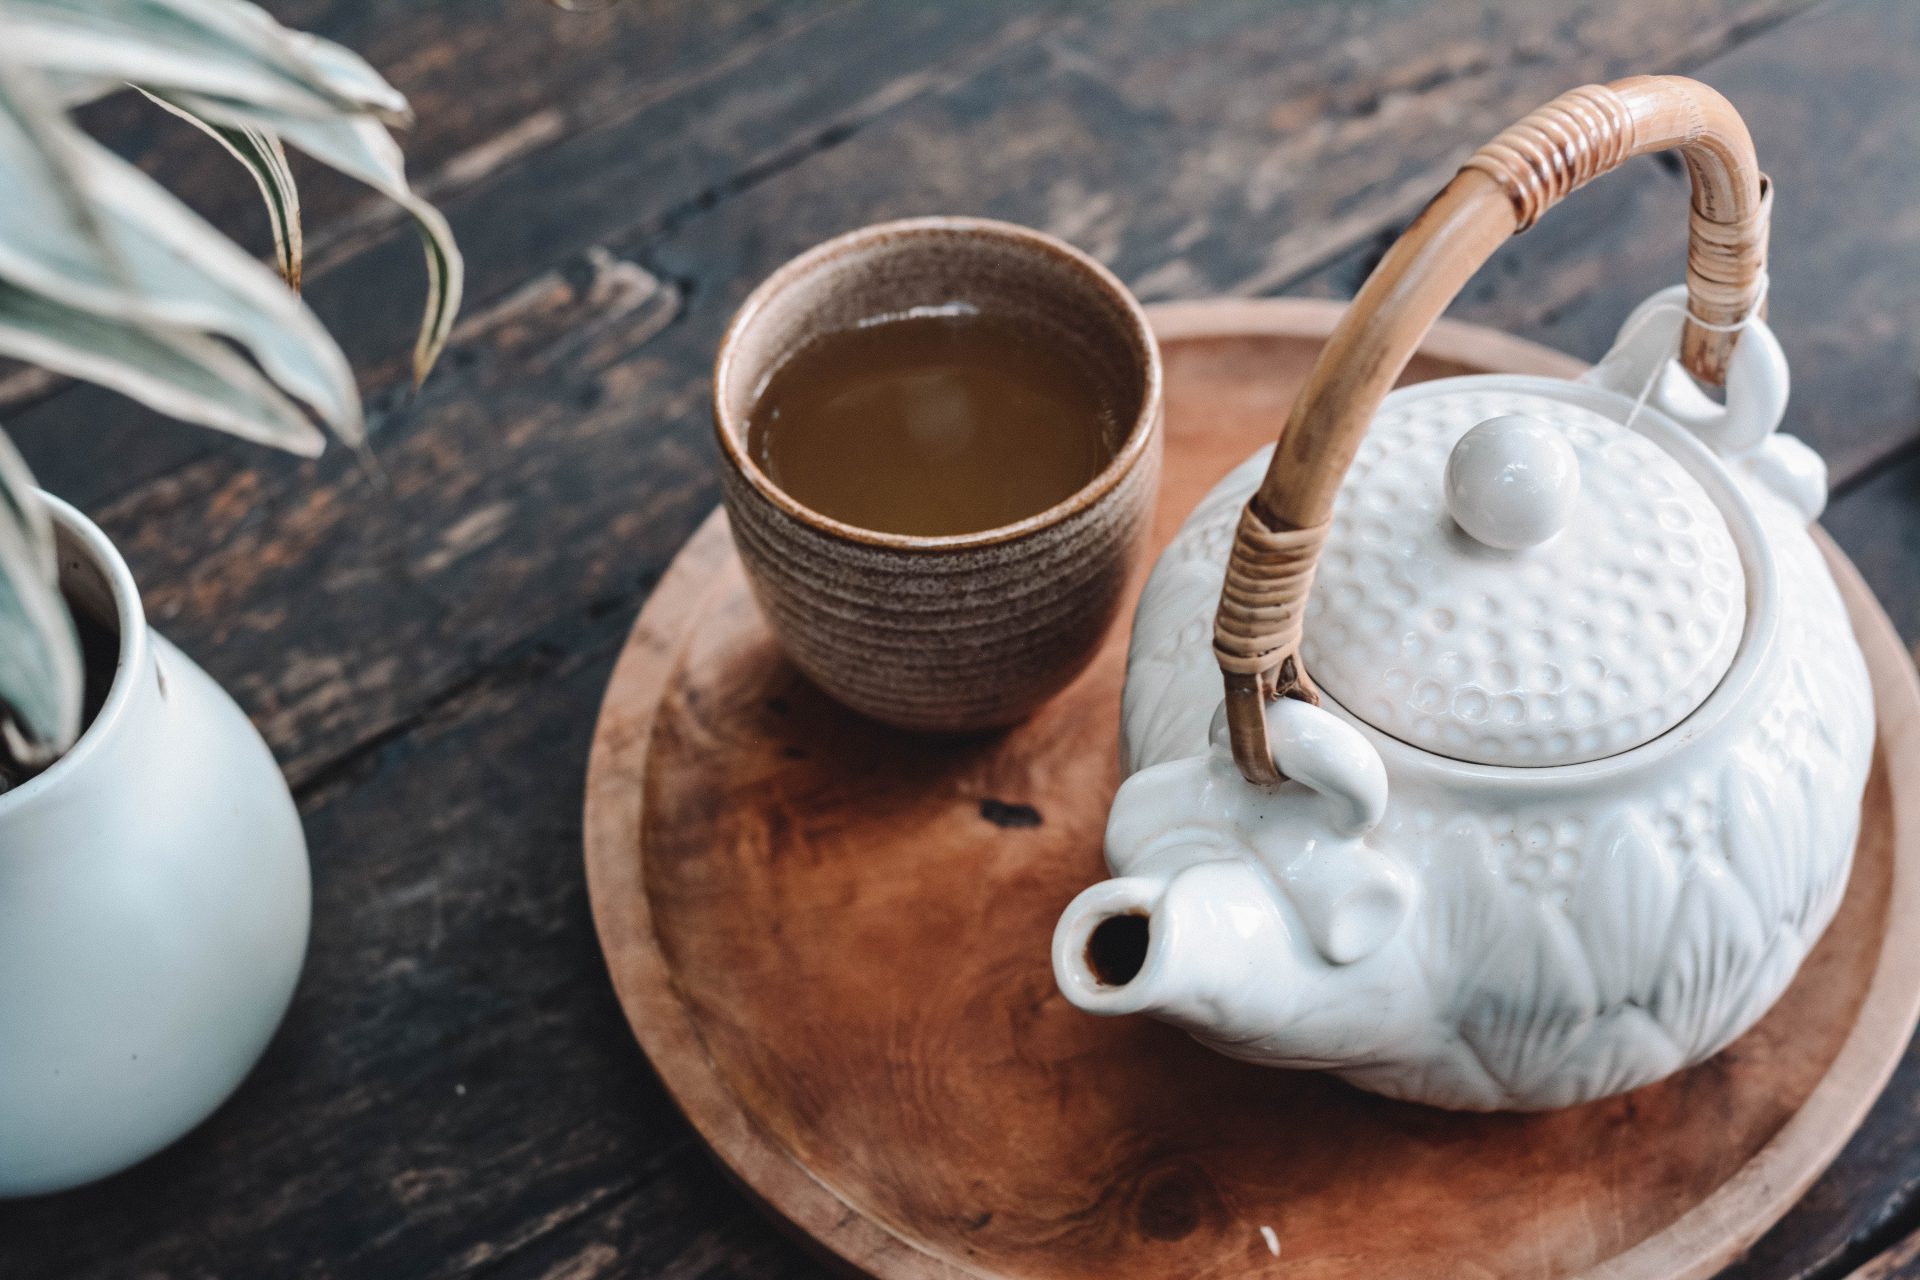 Dark tea works well at reducing diabetes risk